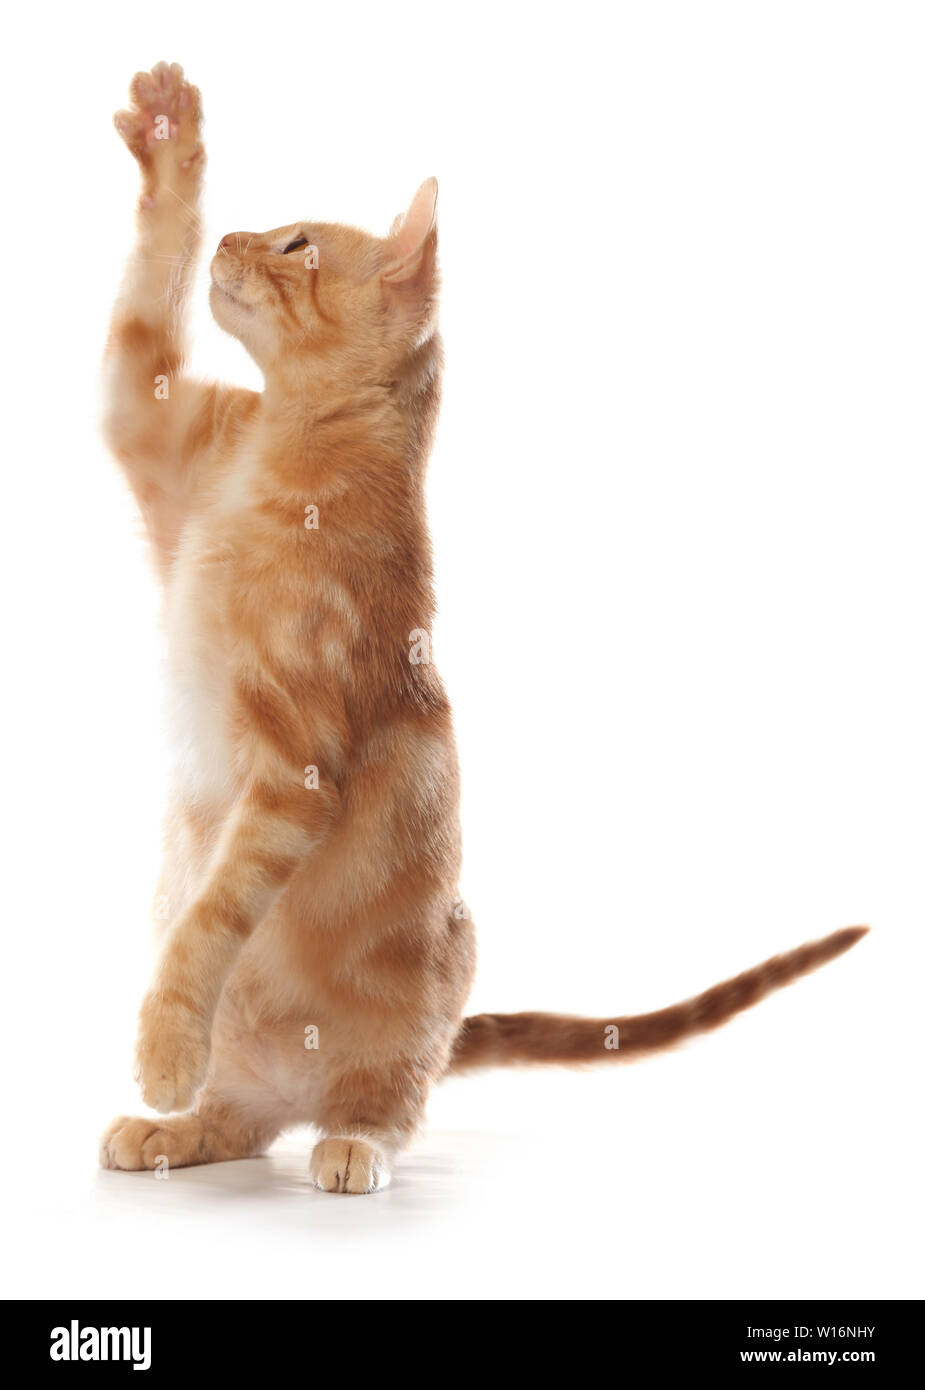 Cute little orange tabby kitten, isolated on white background Stock Photo